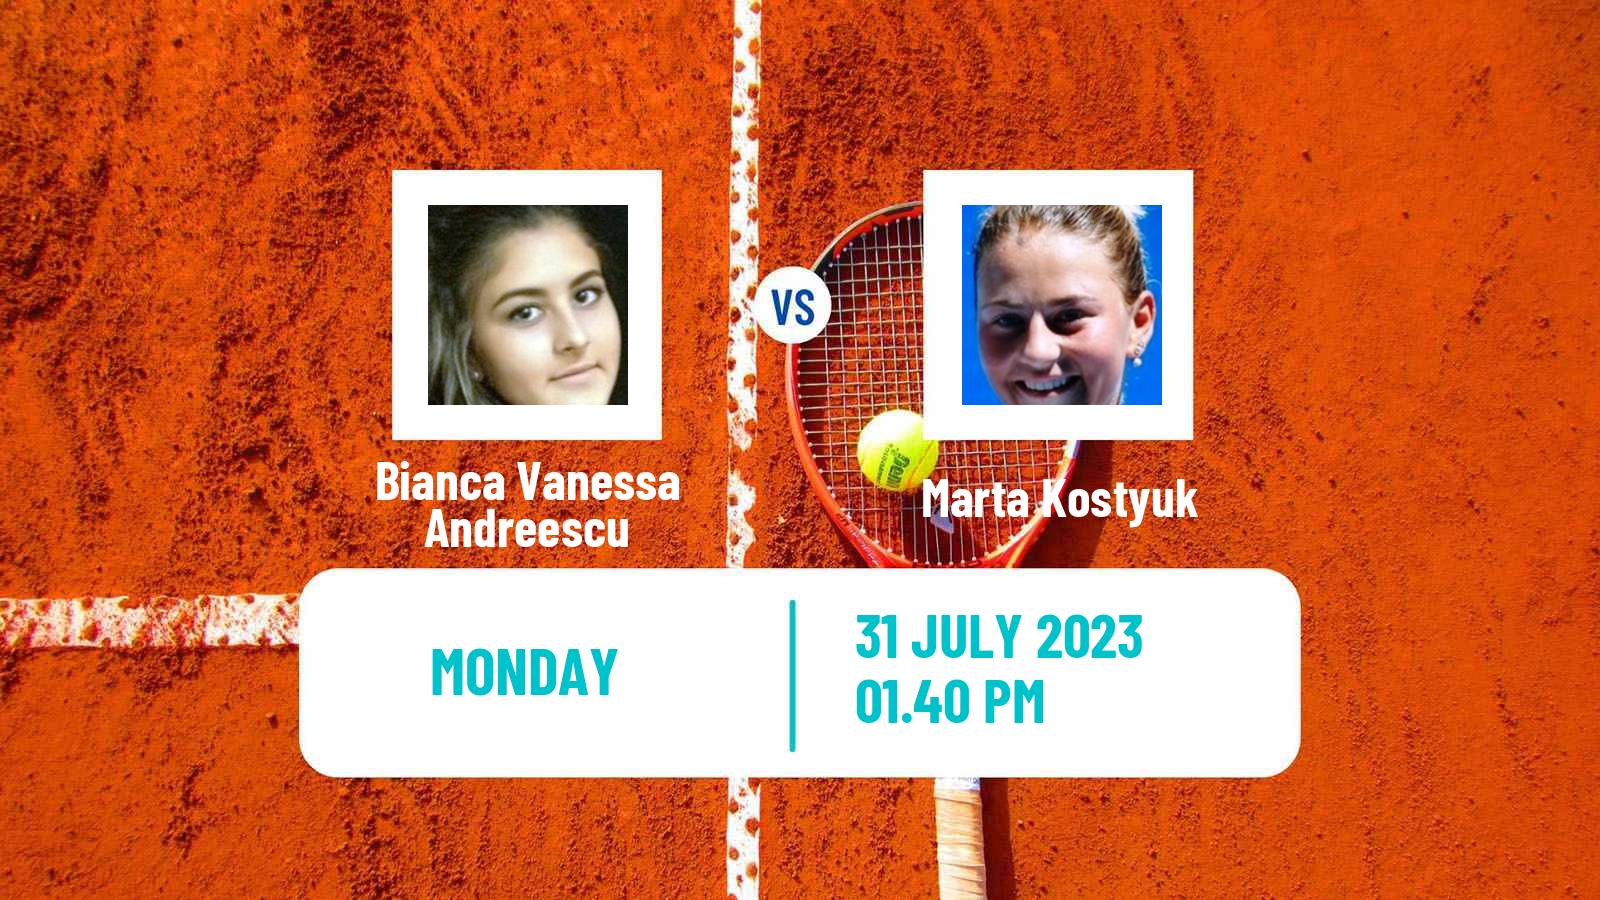 Tennis WTA Washington Bianca Vanessa Andreescu - Marta Kostyuk